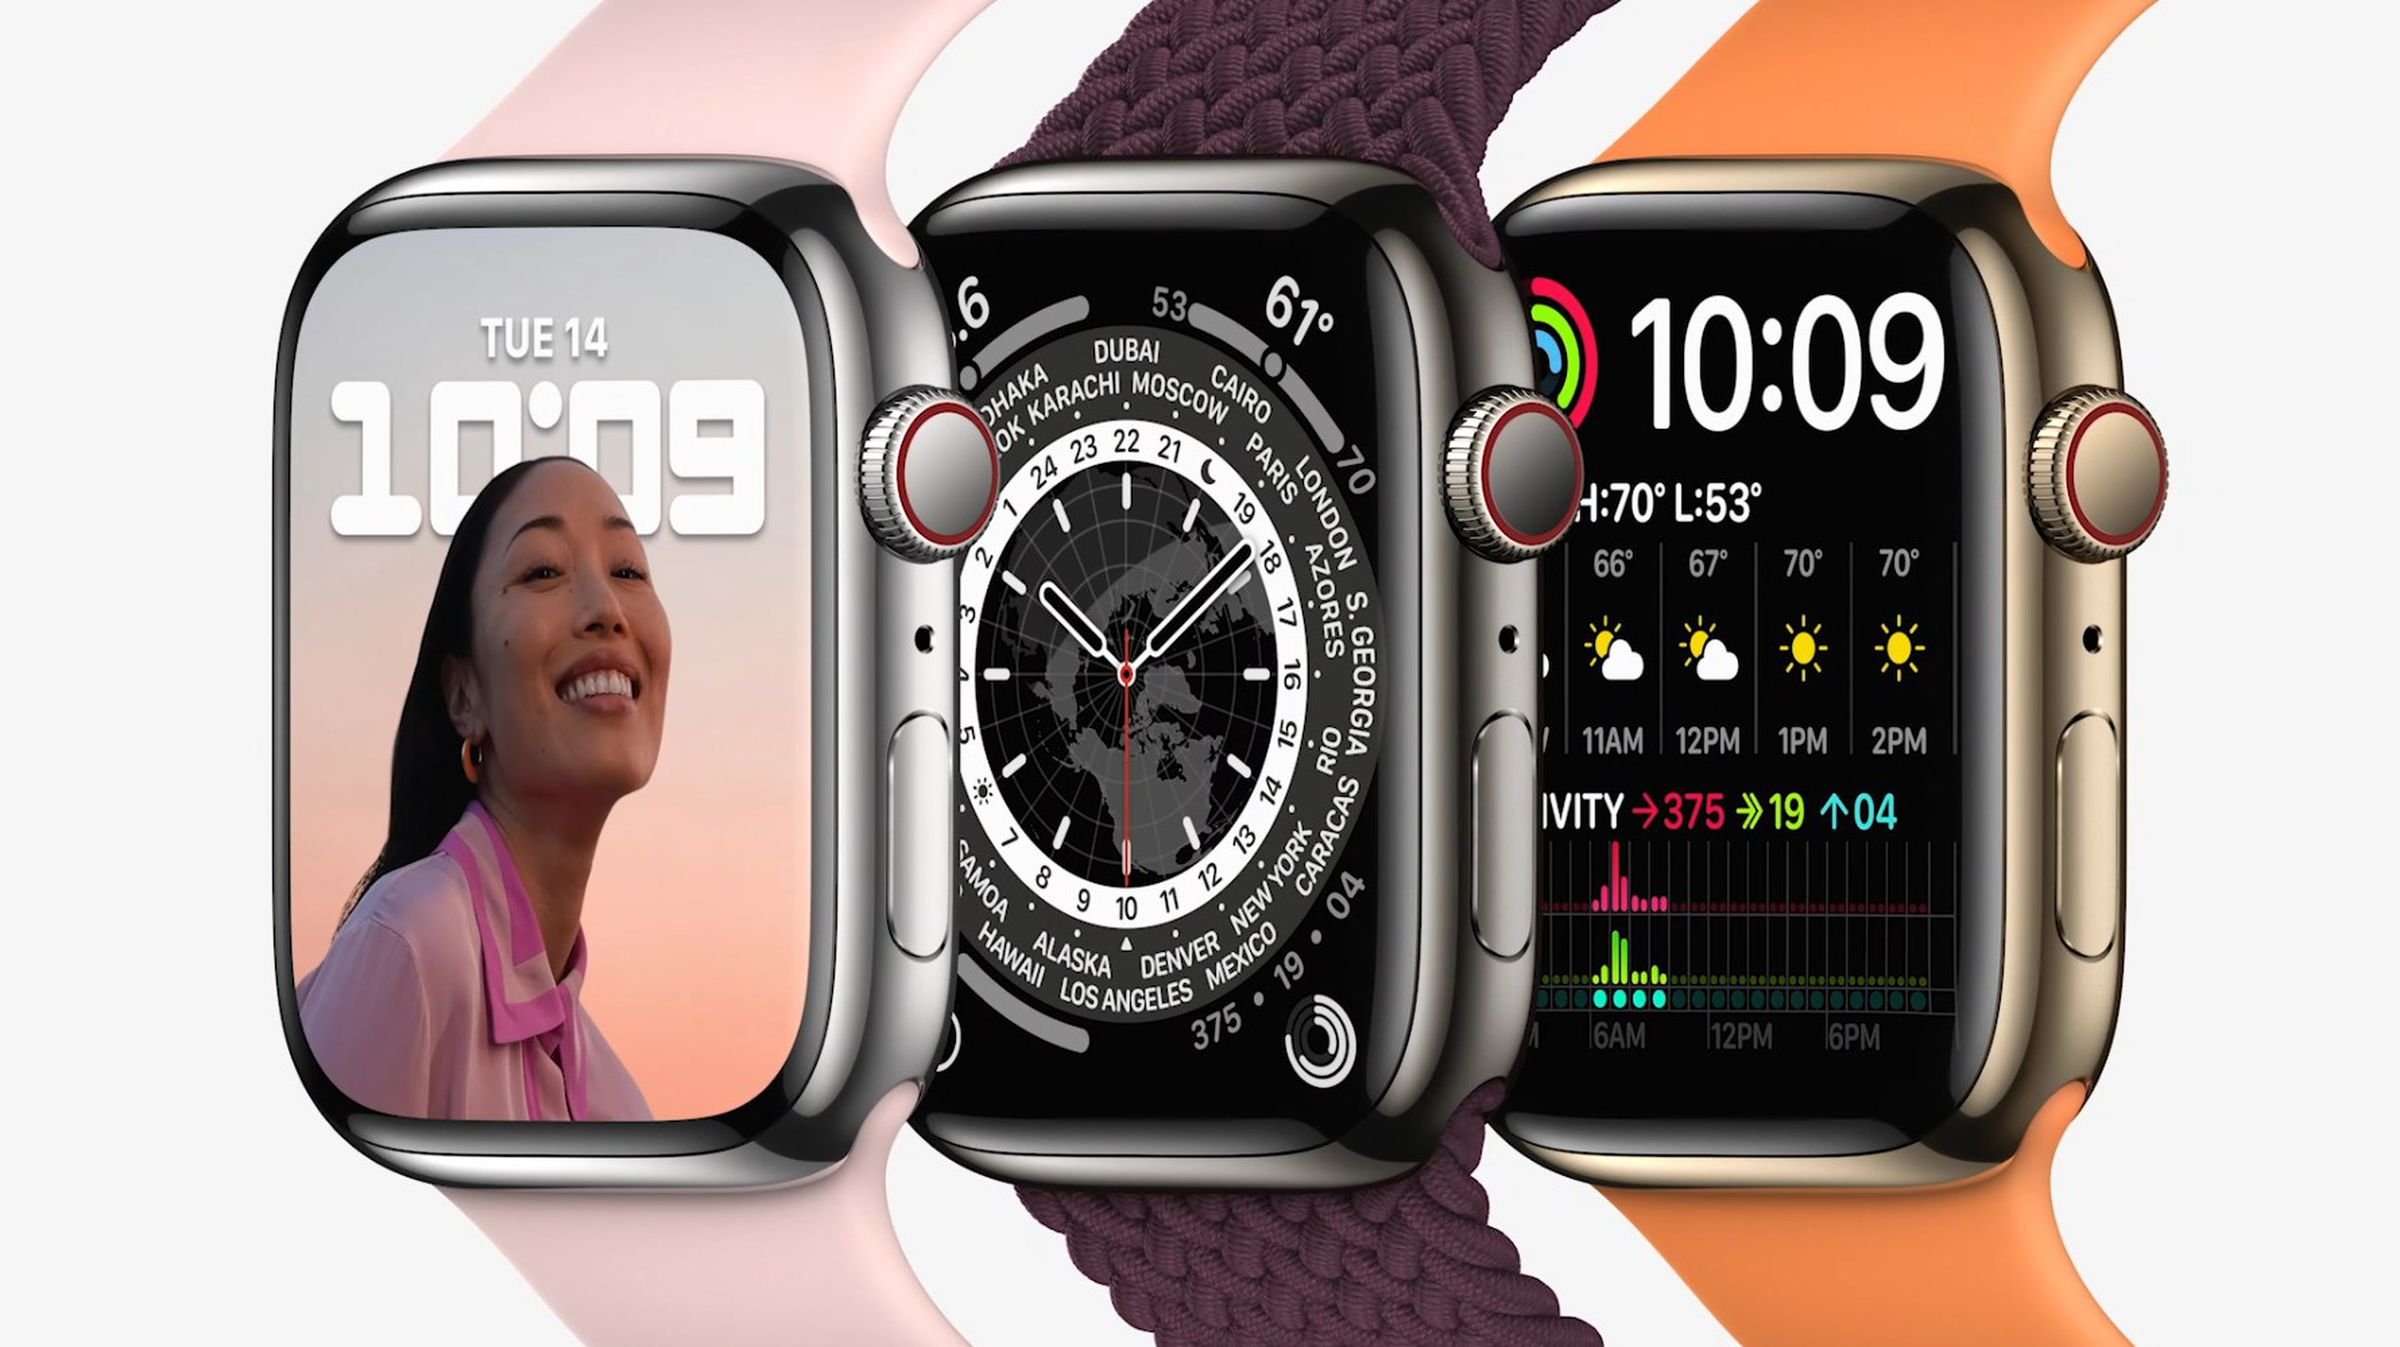 The Apple Watch Series 7.